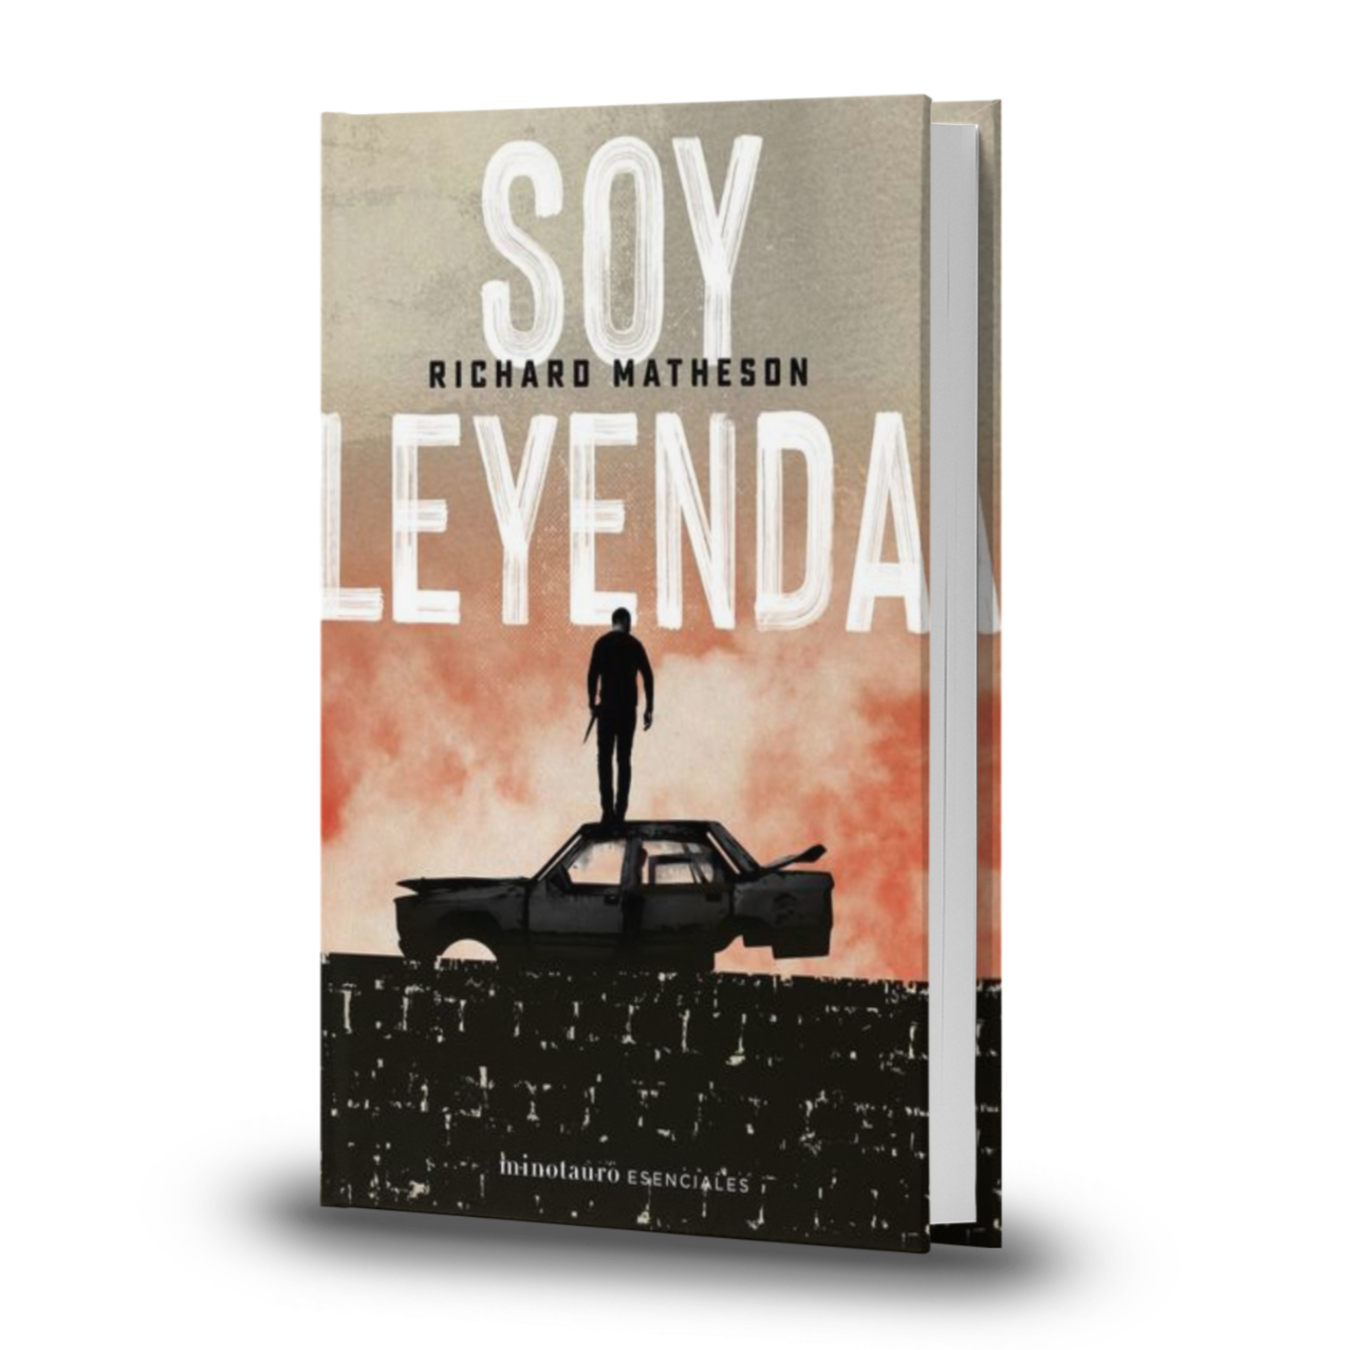 Soy Leyenda - Richard Matheson